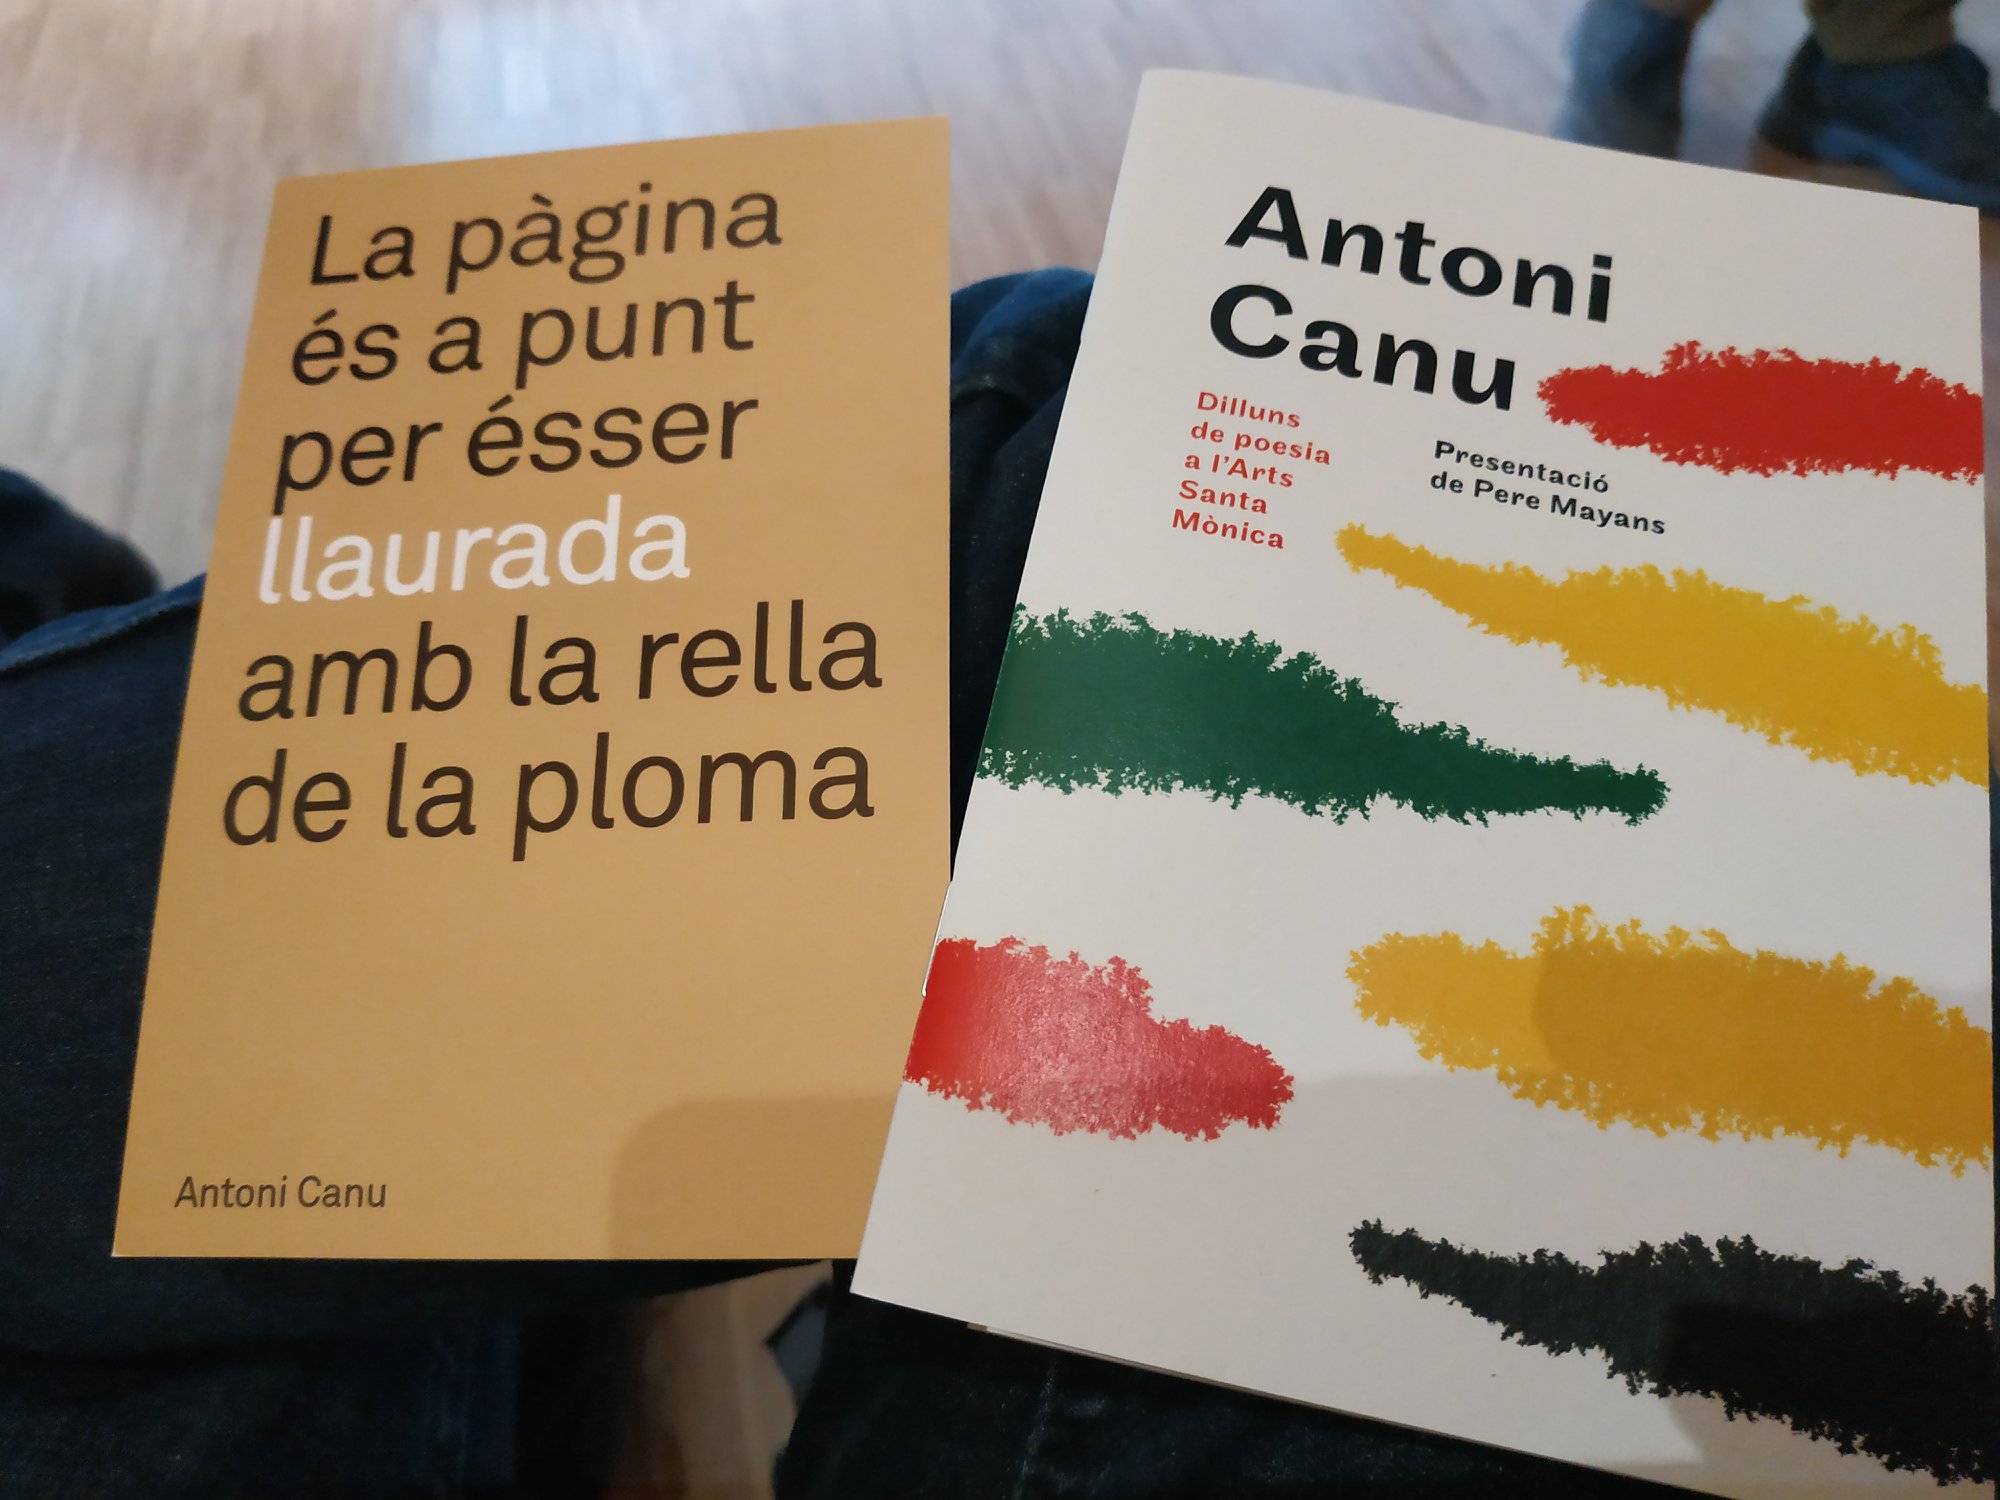 Antoni Canu in Bartzellona: cando sa poesia catalana protzedit dae Sardigna